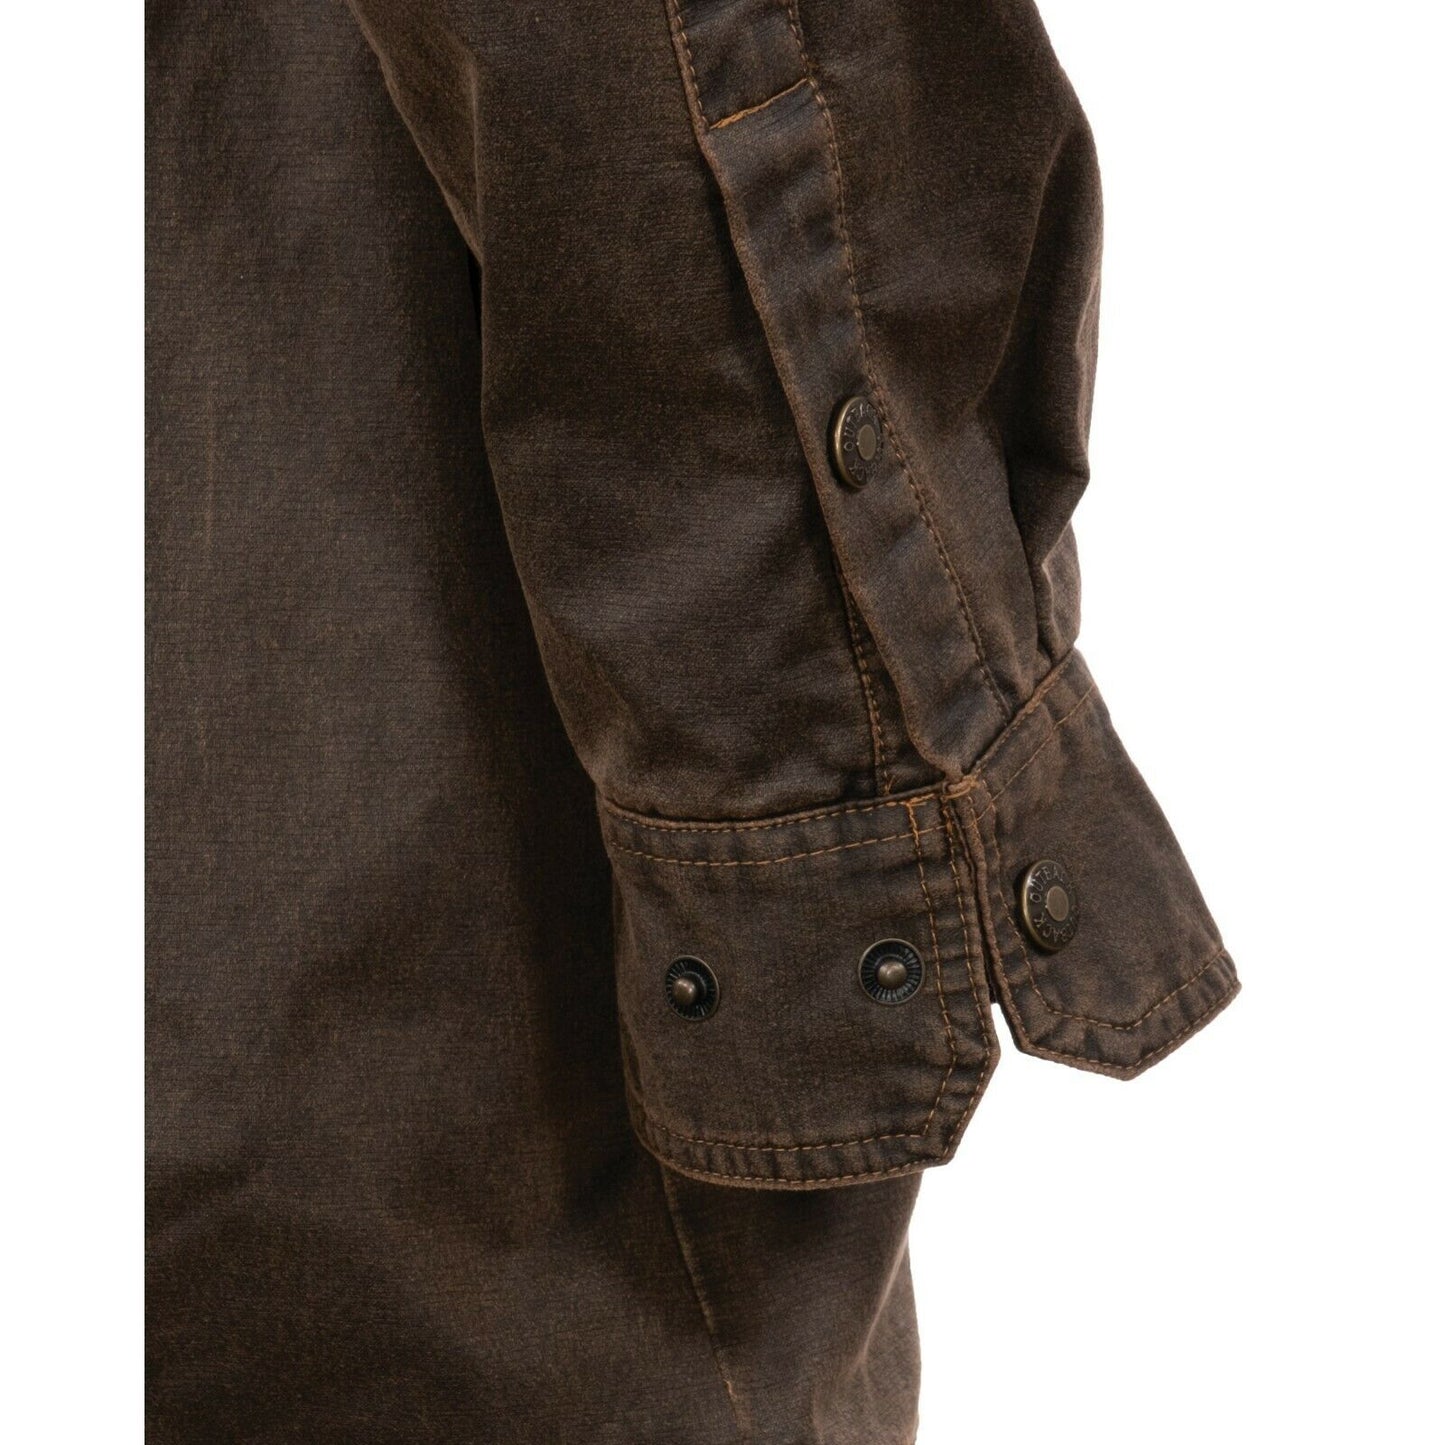 Outback Trading Company® Men's Wayne Brown Snap Jacket 29754-BRN